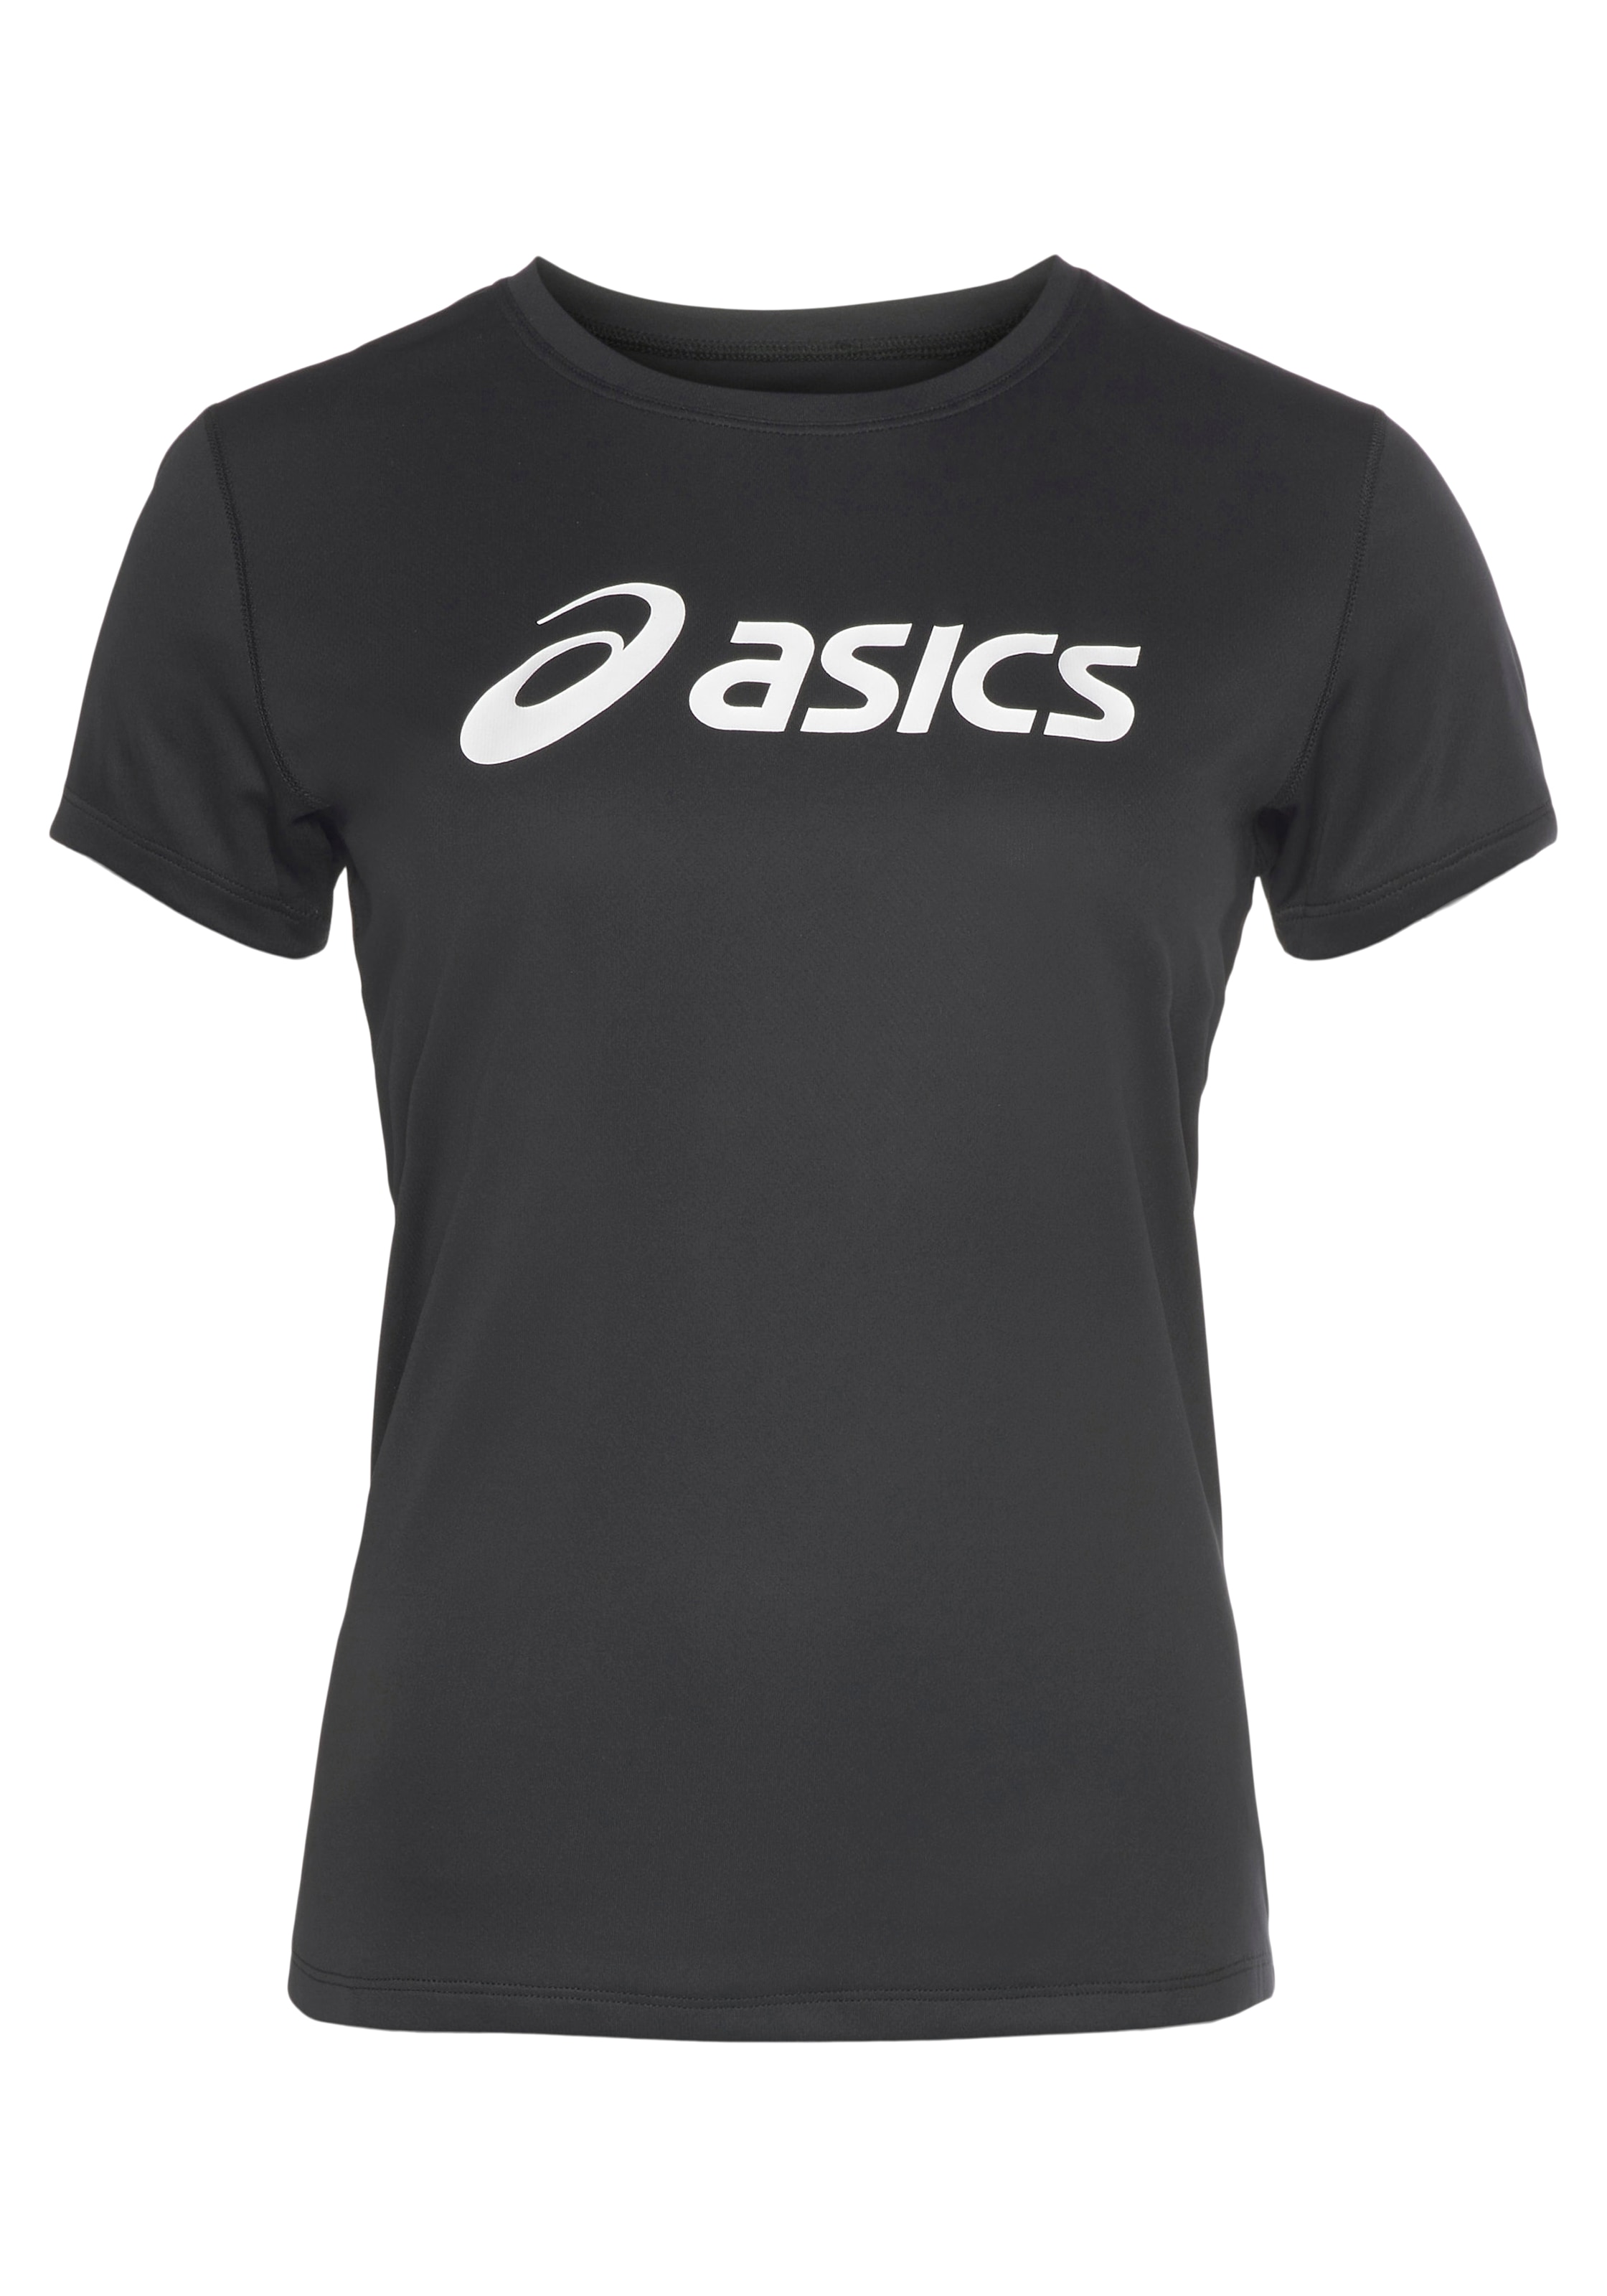 Asics Laufshirt »CORE ASICS TOP« kaufen online bei OTTO